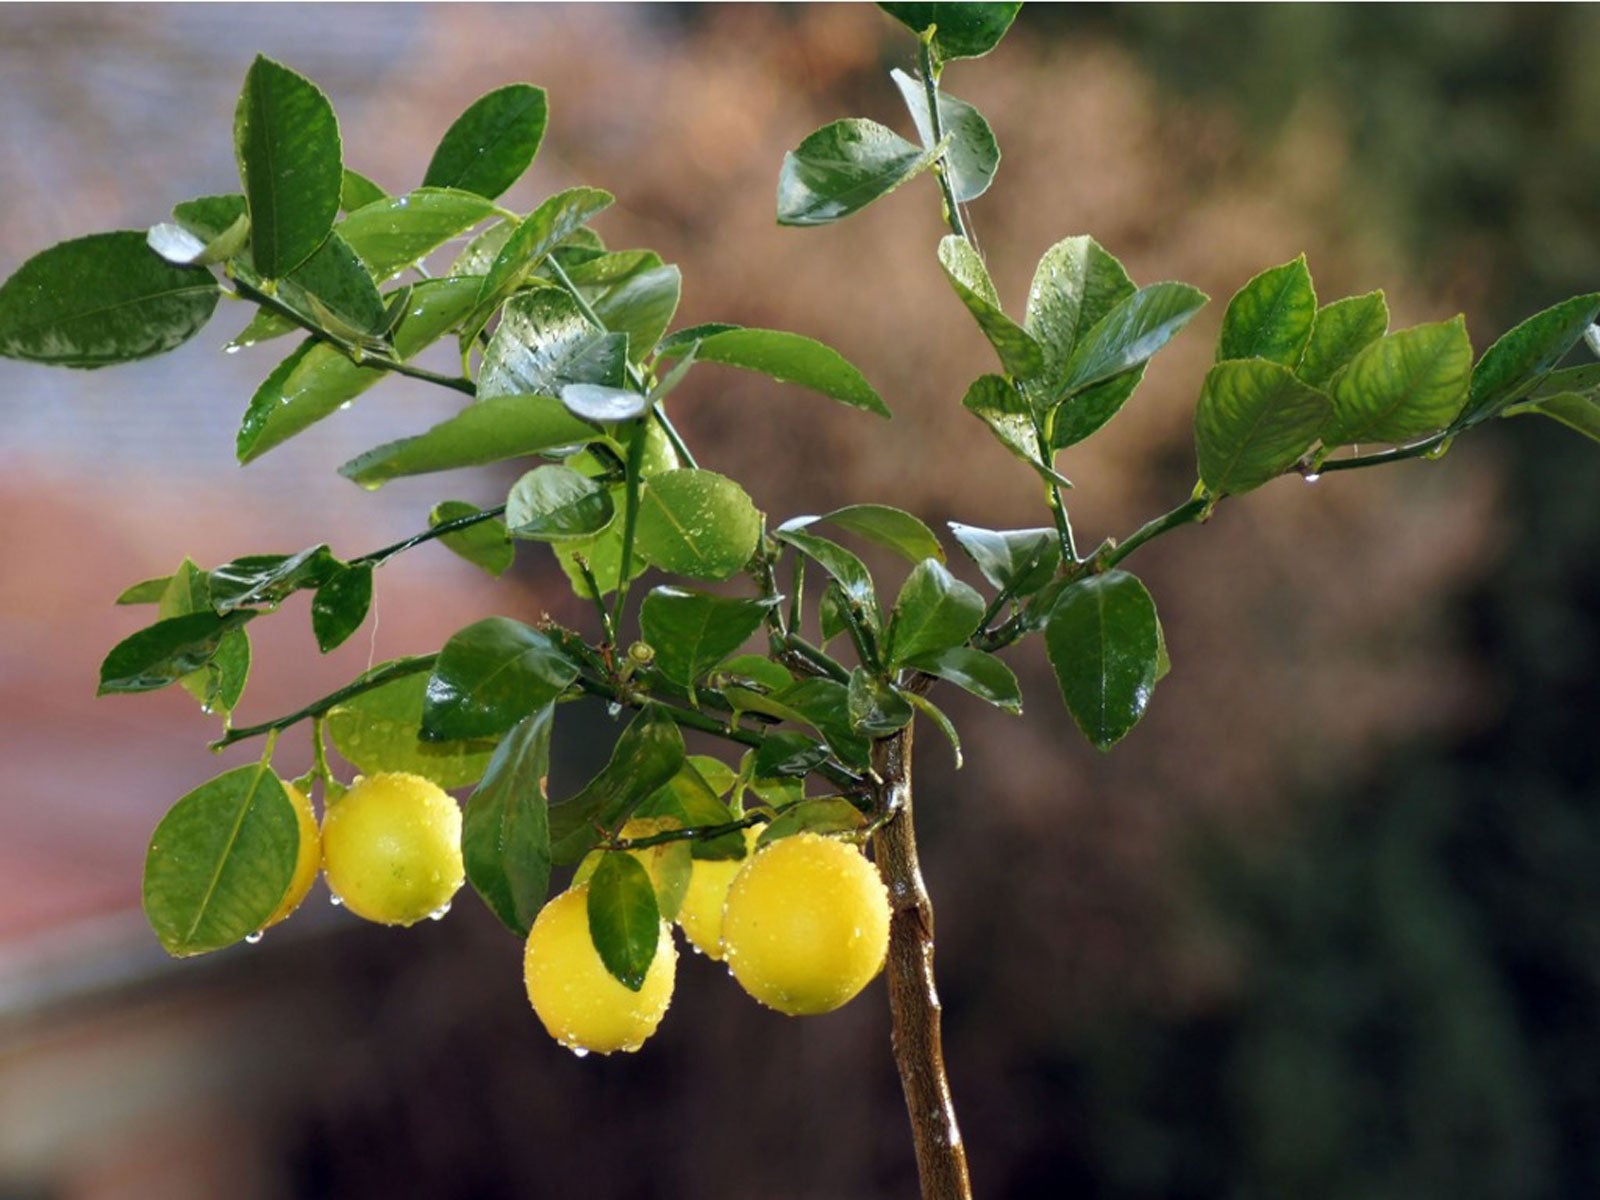 Lemon Leaf Problems - What Causes Lemon Leaves To Drop Off